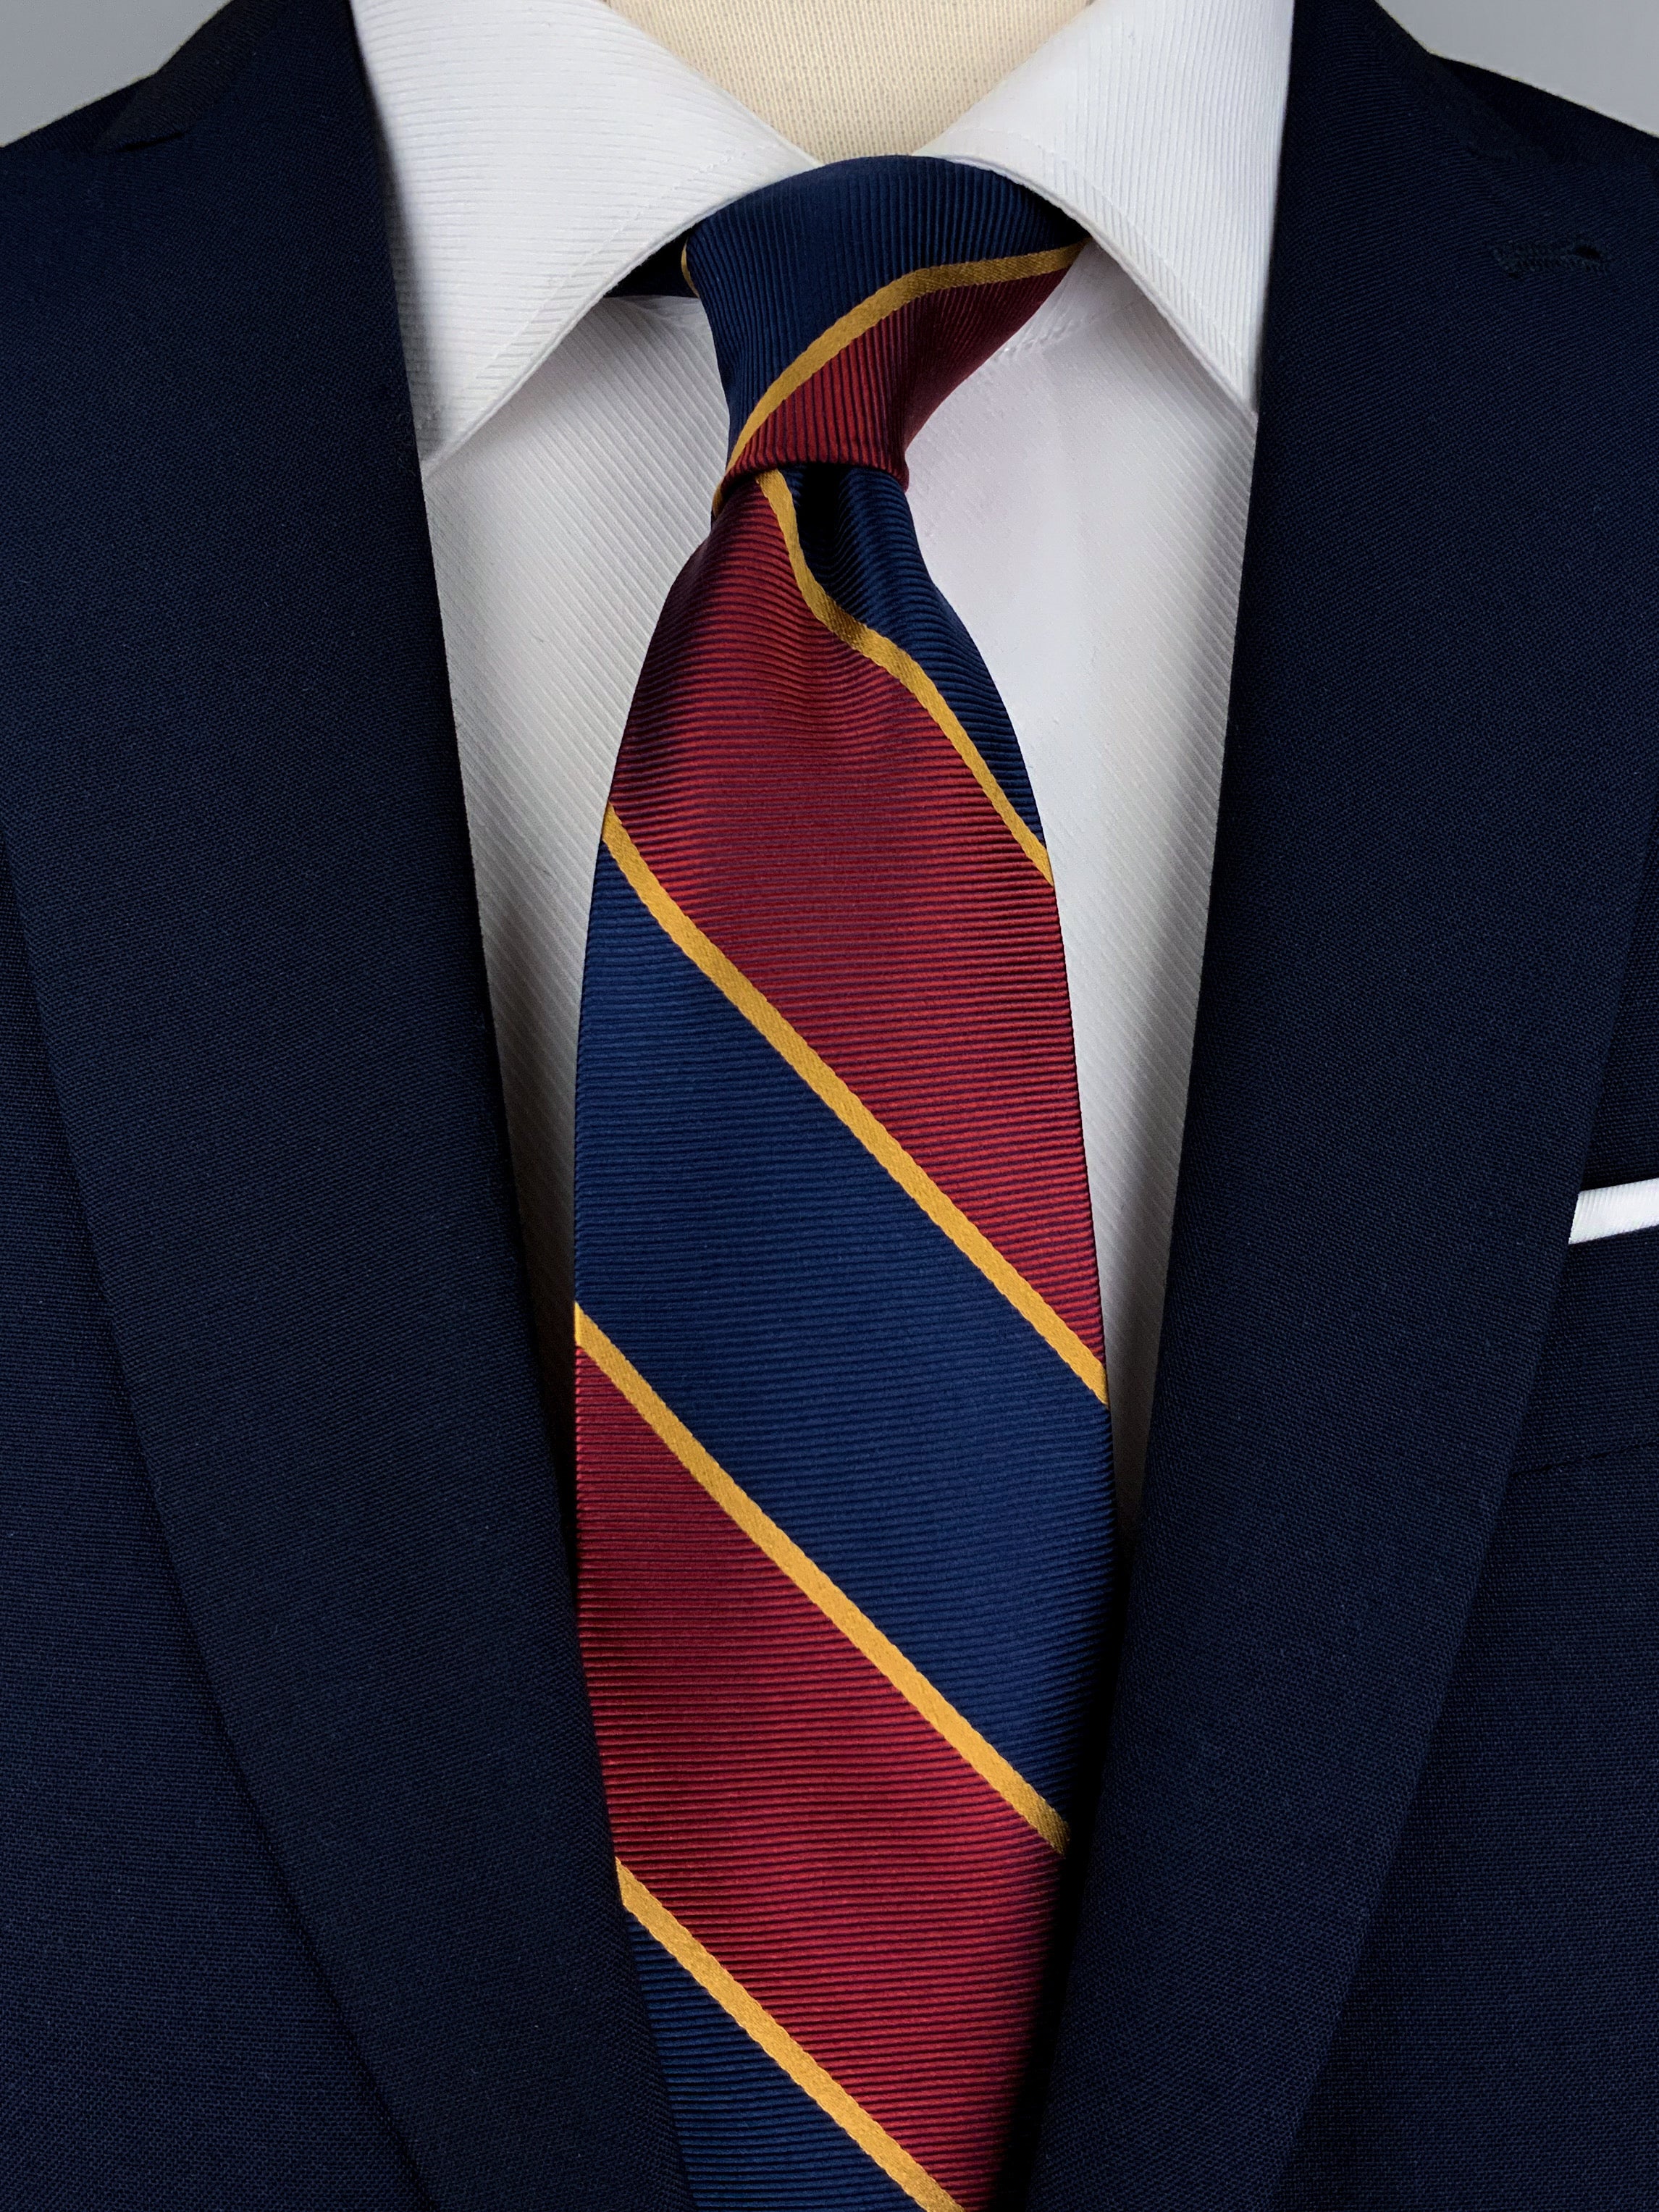 Choosing A Burgundy Tie for Navy Blue Suit